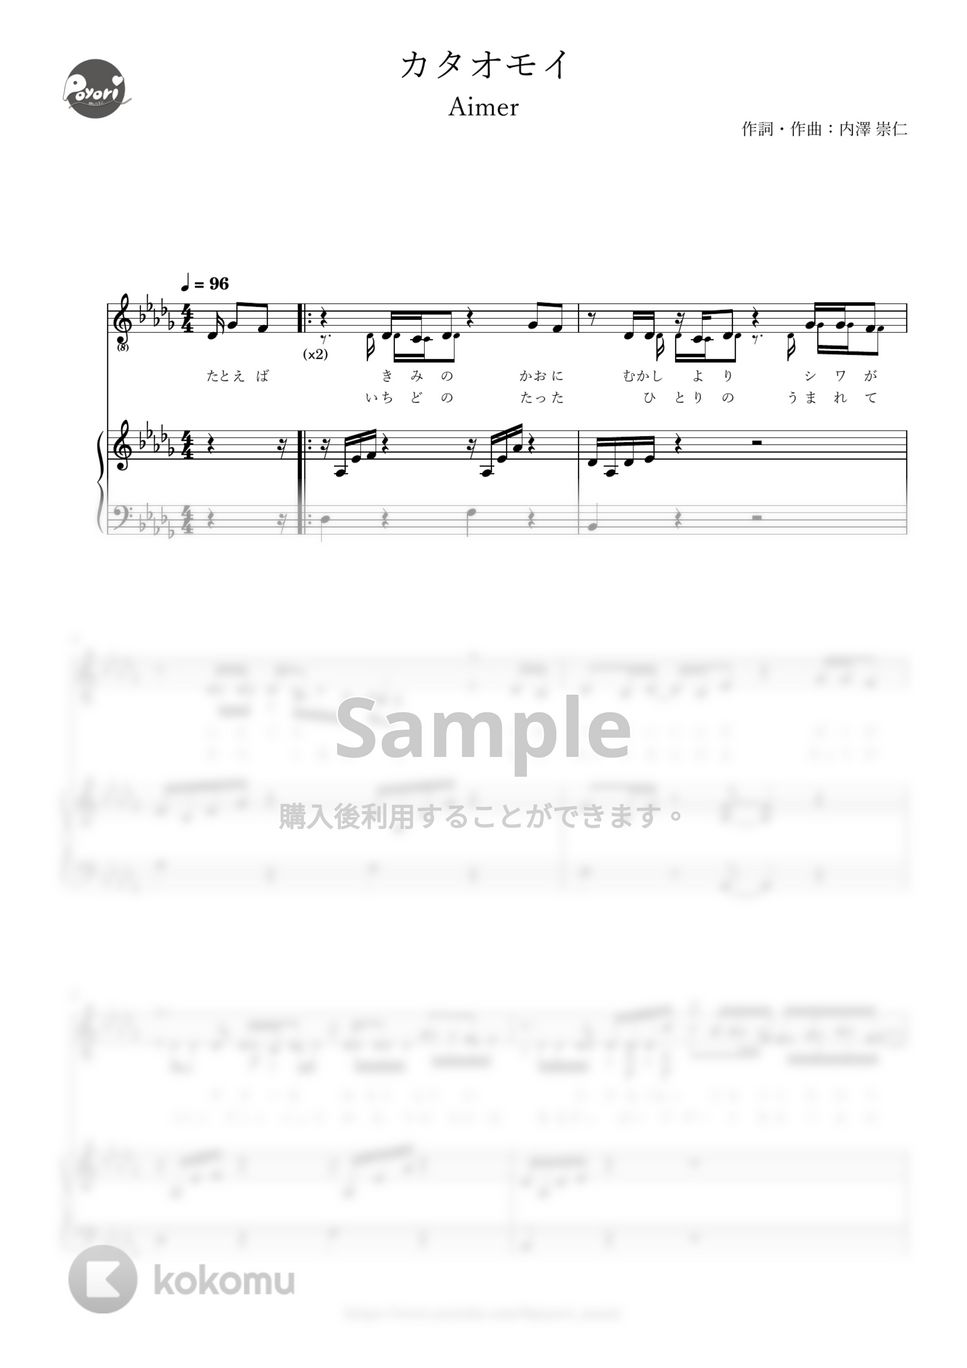 Aimer - カタオモイ (ピアノ伴奏) by poyori